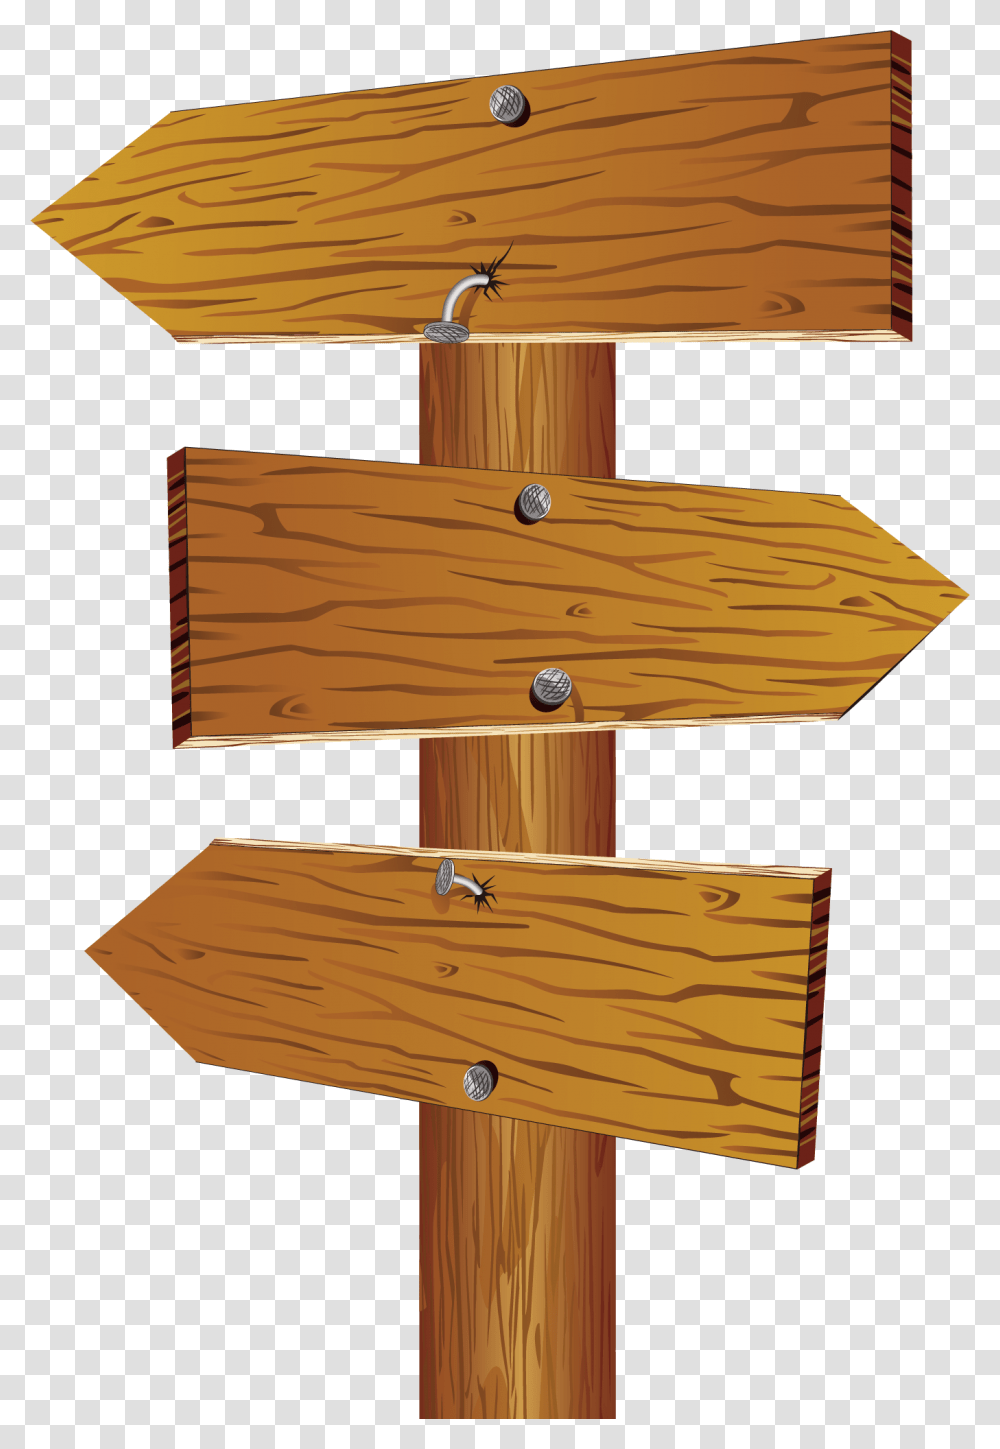 Sign Clip Art Wooden Wooden Arrow Signs Clipart, Hardwood, Plywood, Bird, Animal Transparent Png